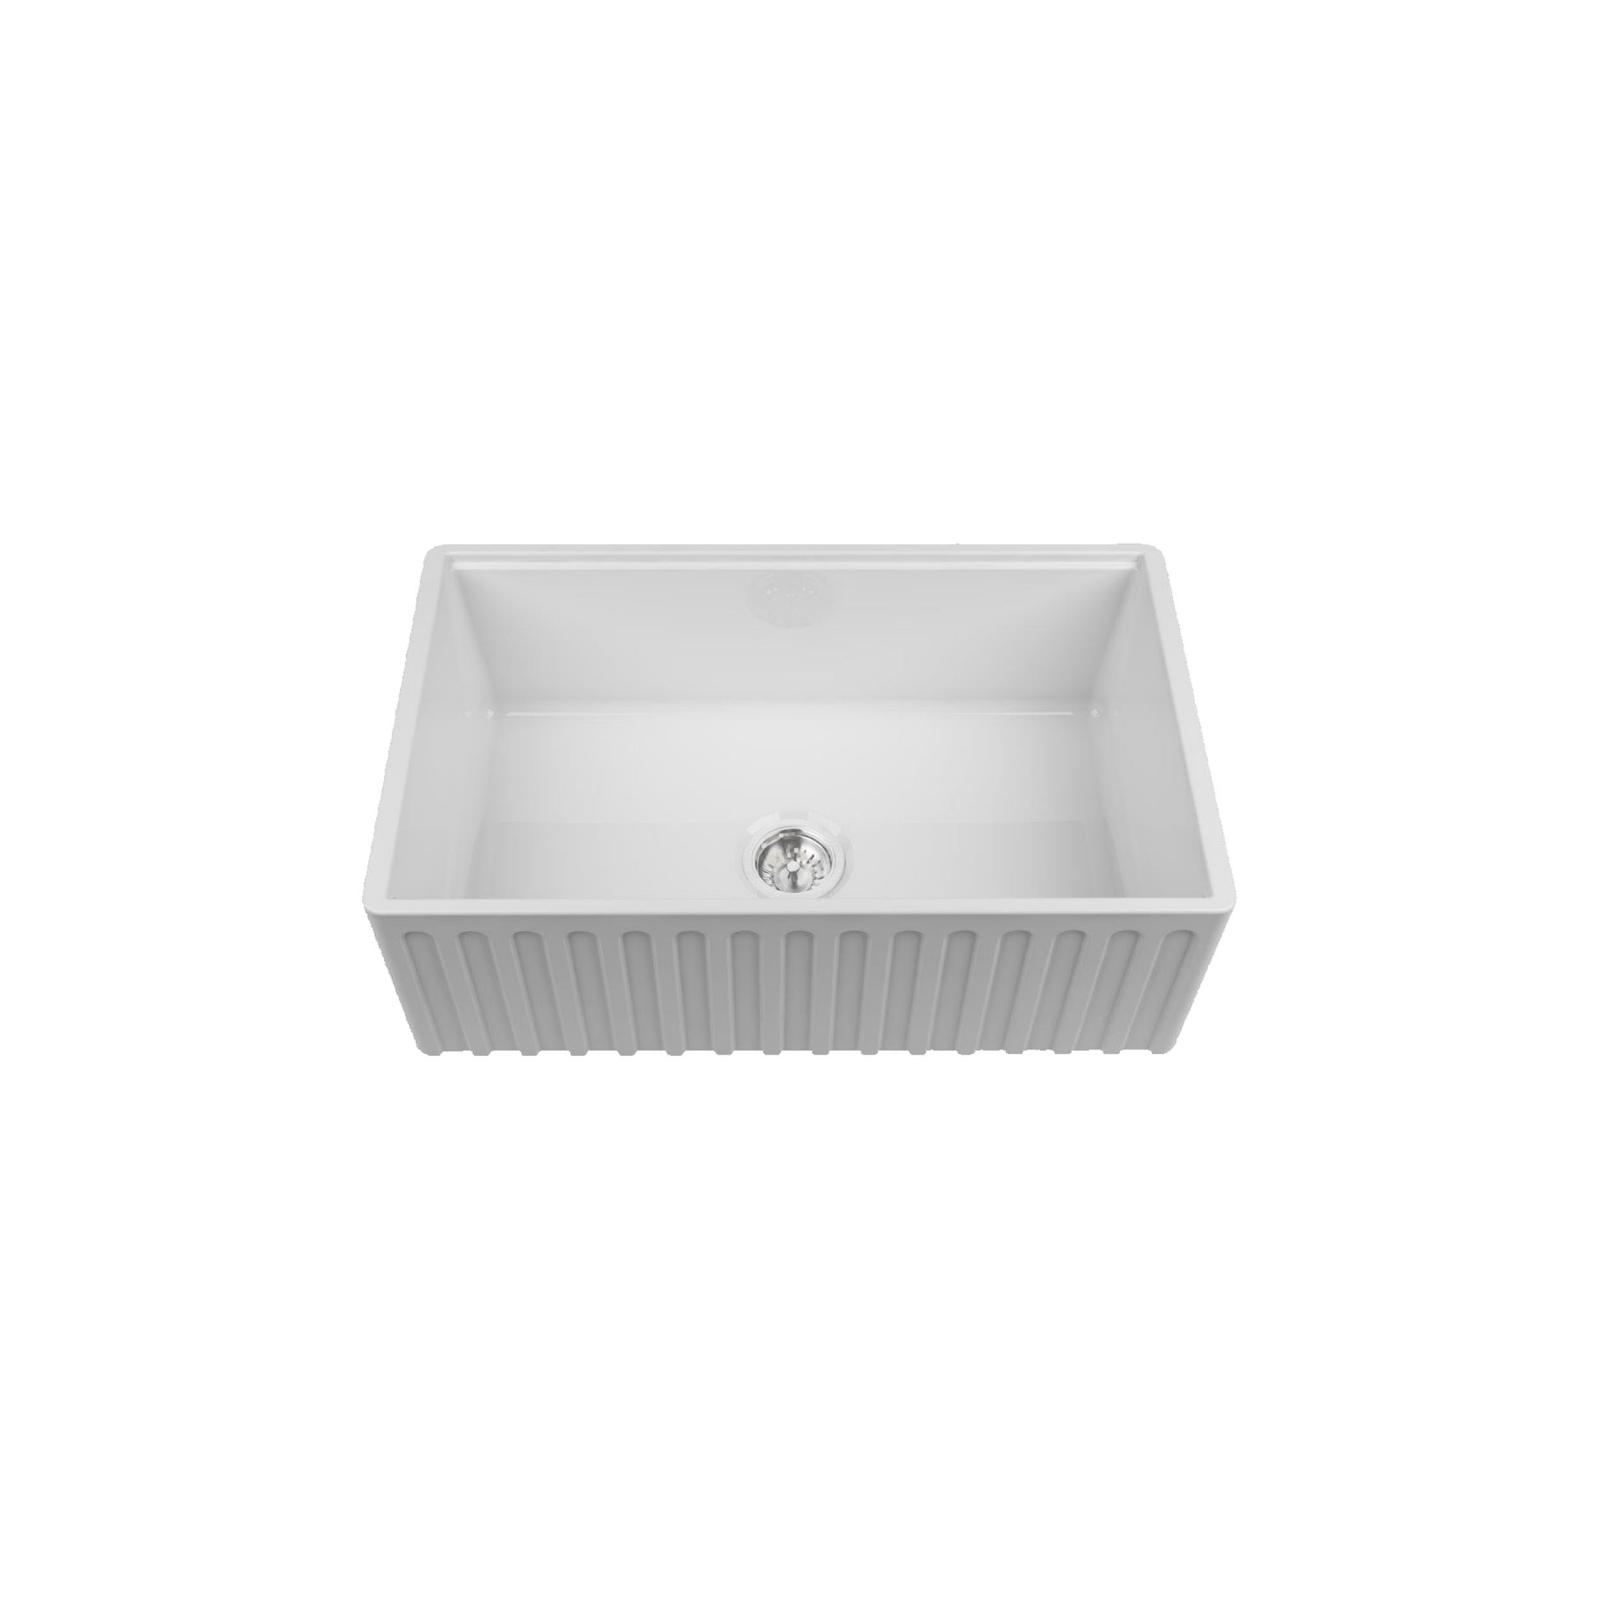 High-quality sink Louis Le Grand I - single bowl, ceramic